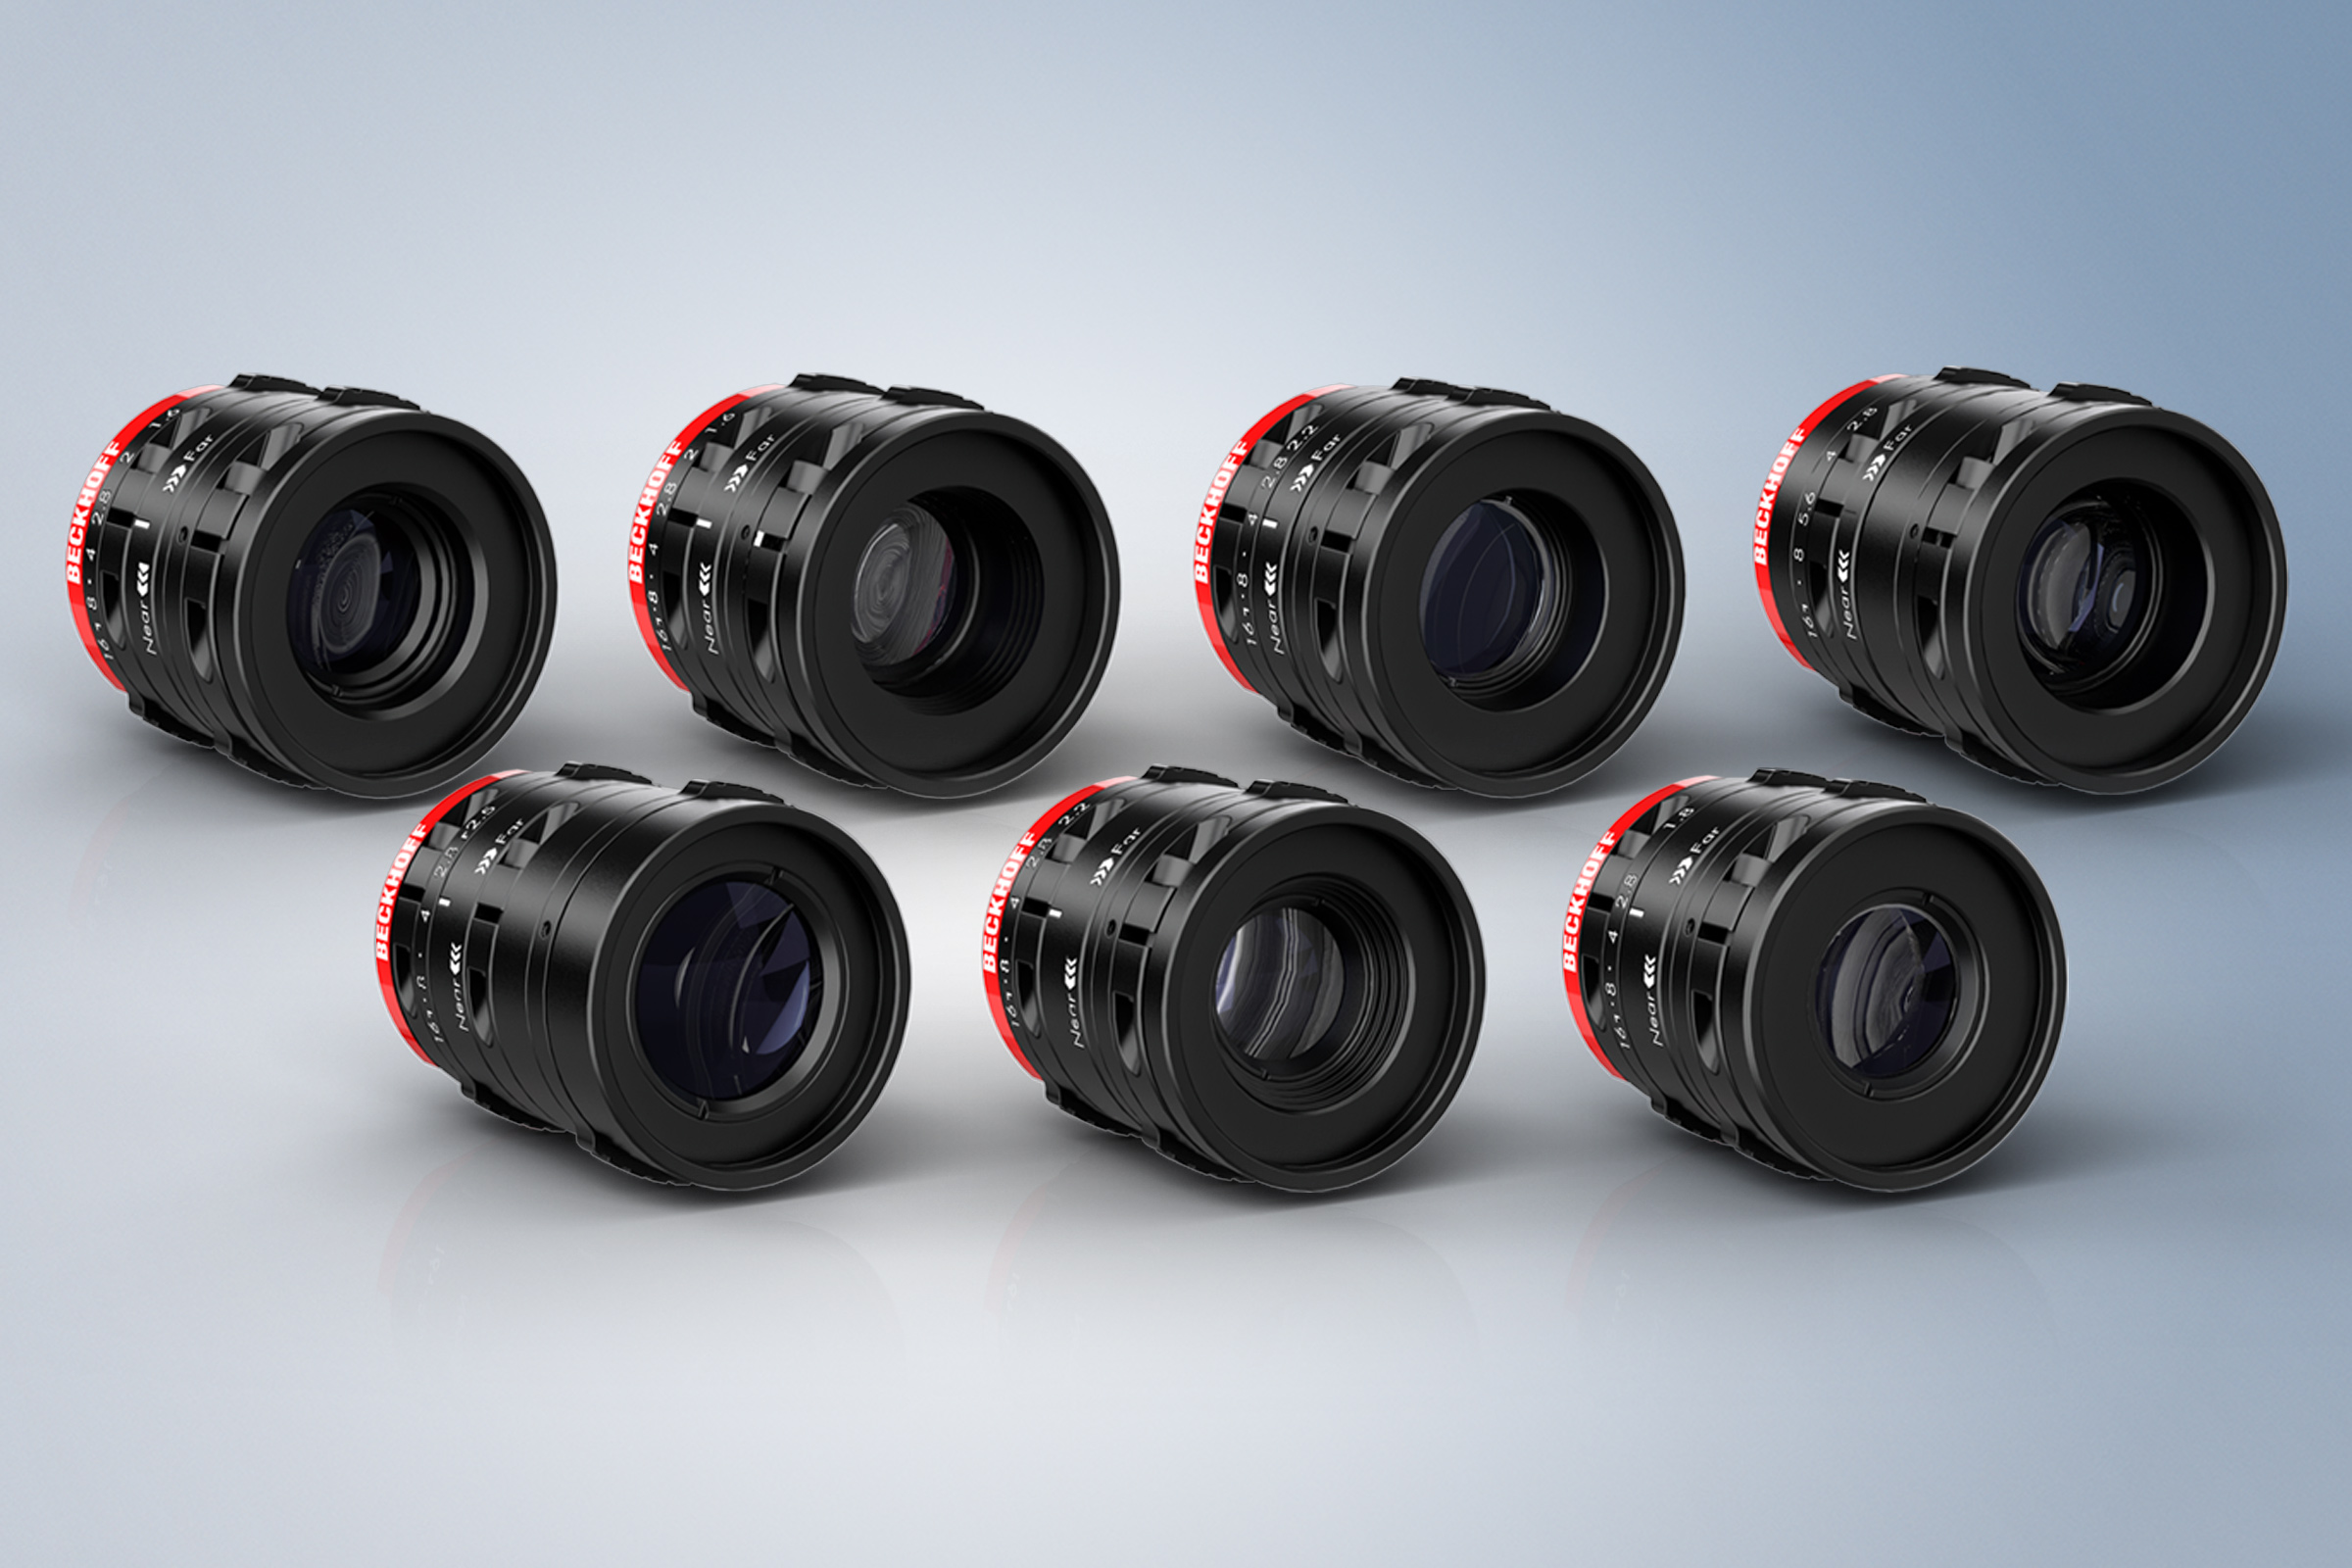 VOS2000 lens series